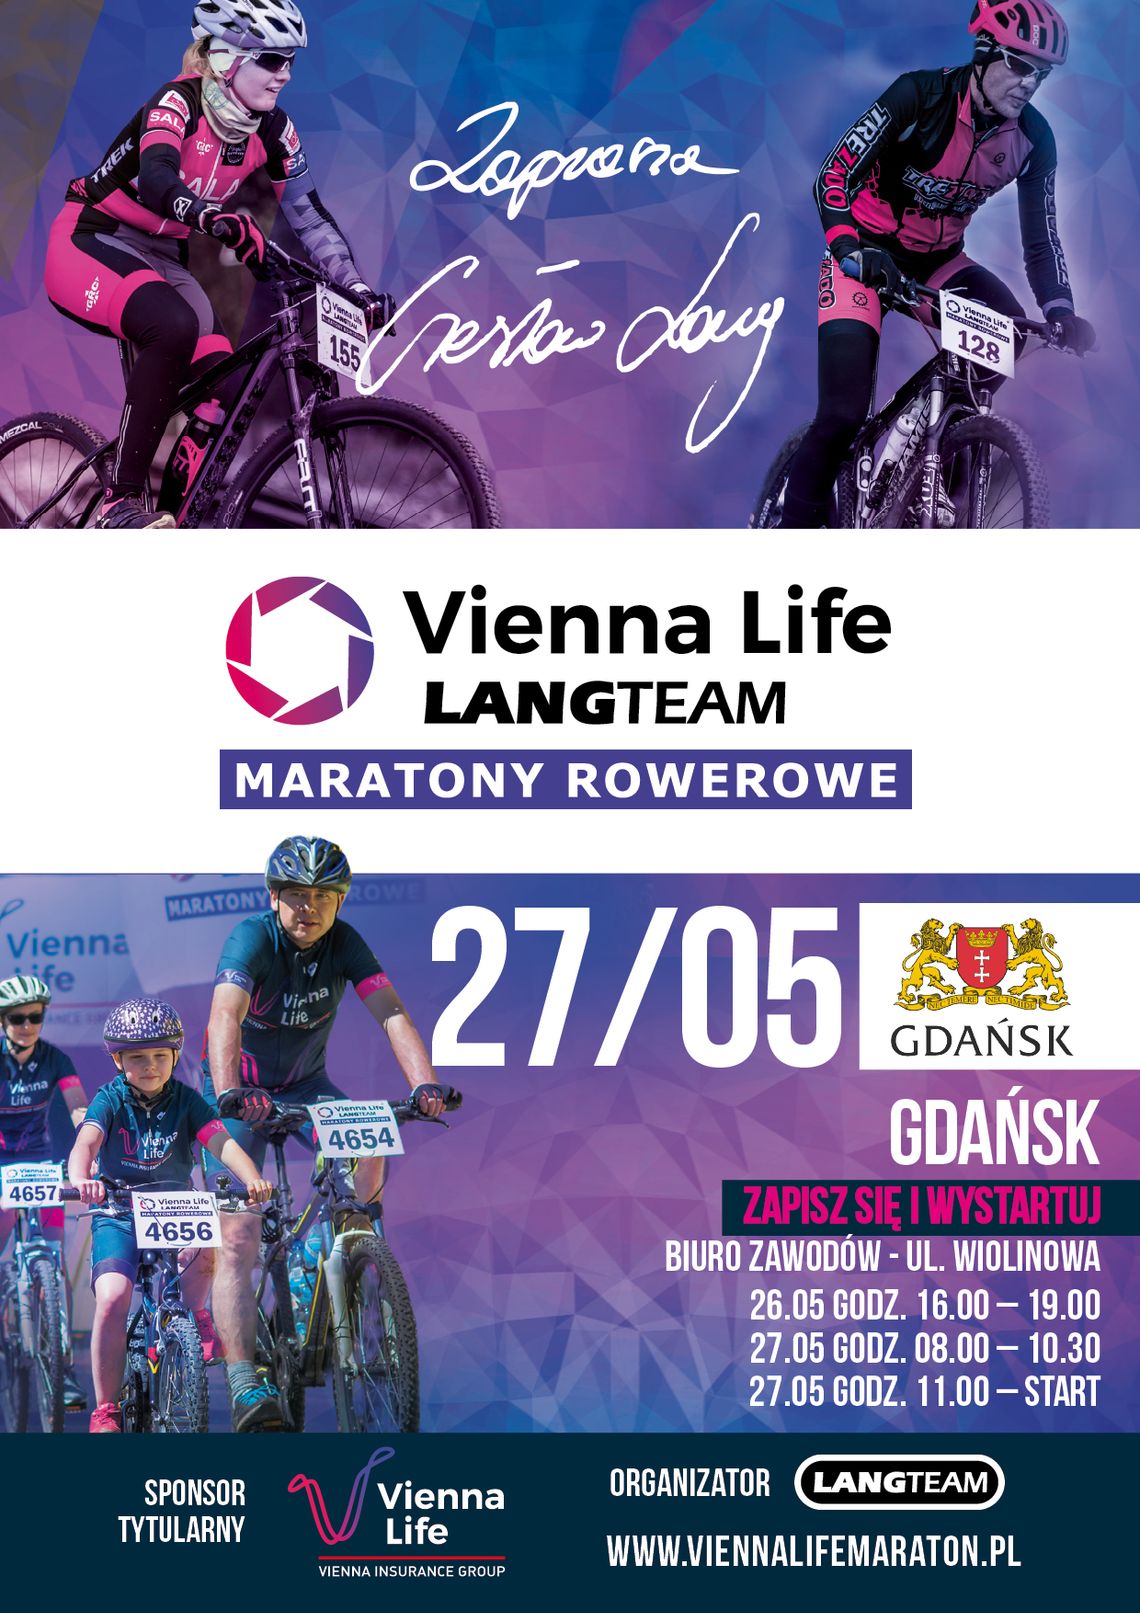 Vienna Life Lang Team Maratony Rowerowe Gdańsk 2018